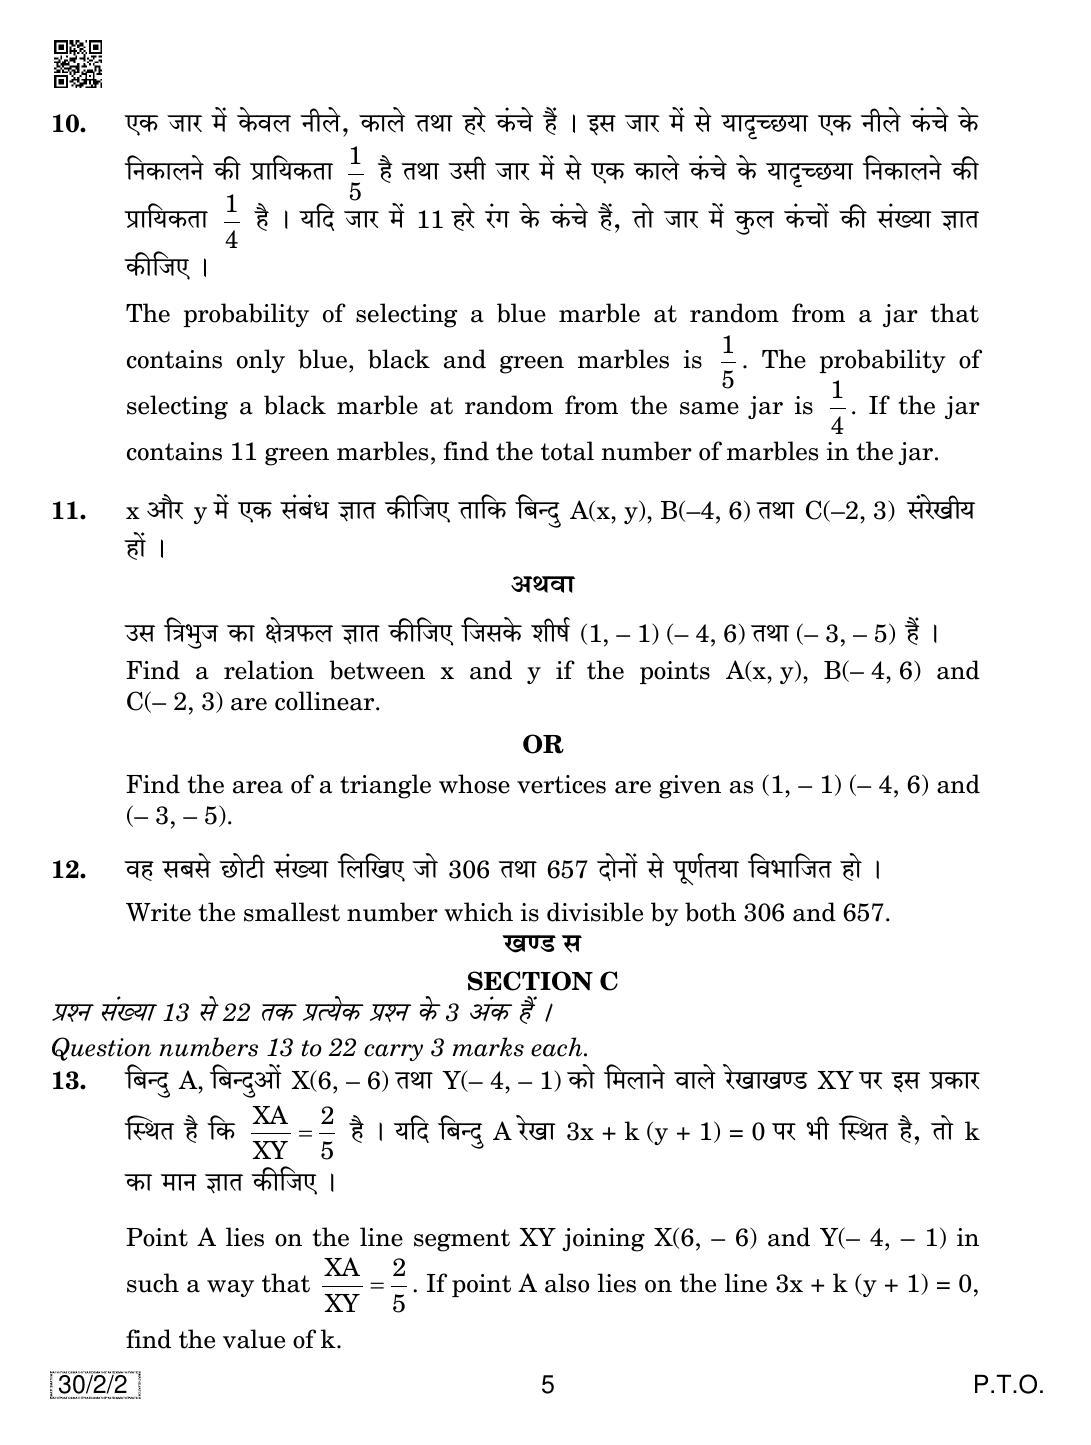 CBSE Class 10 Maths (30/2/2 - SET 2) 2019 Question Paper - Page 5